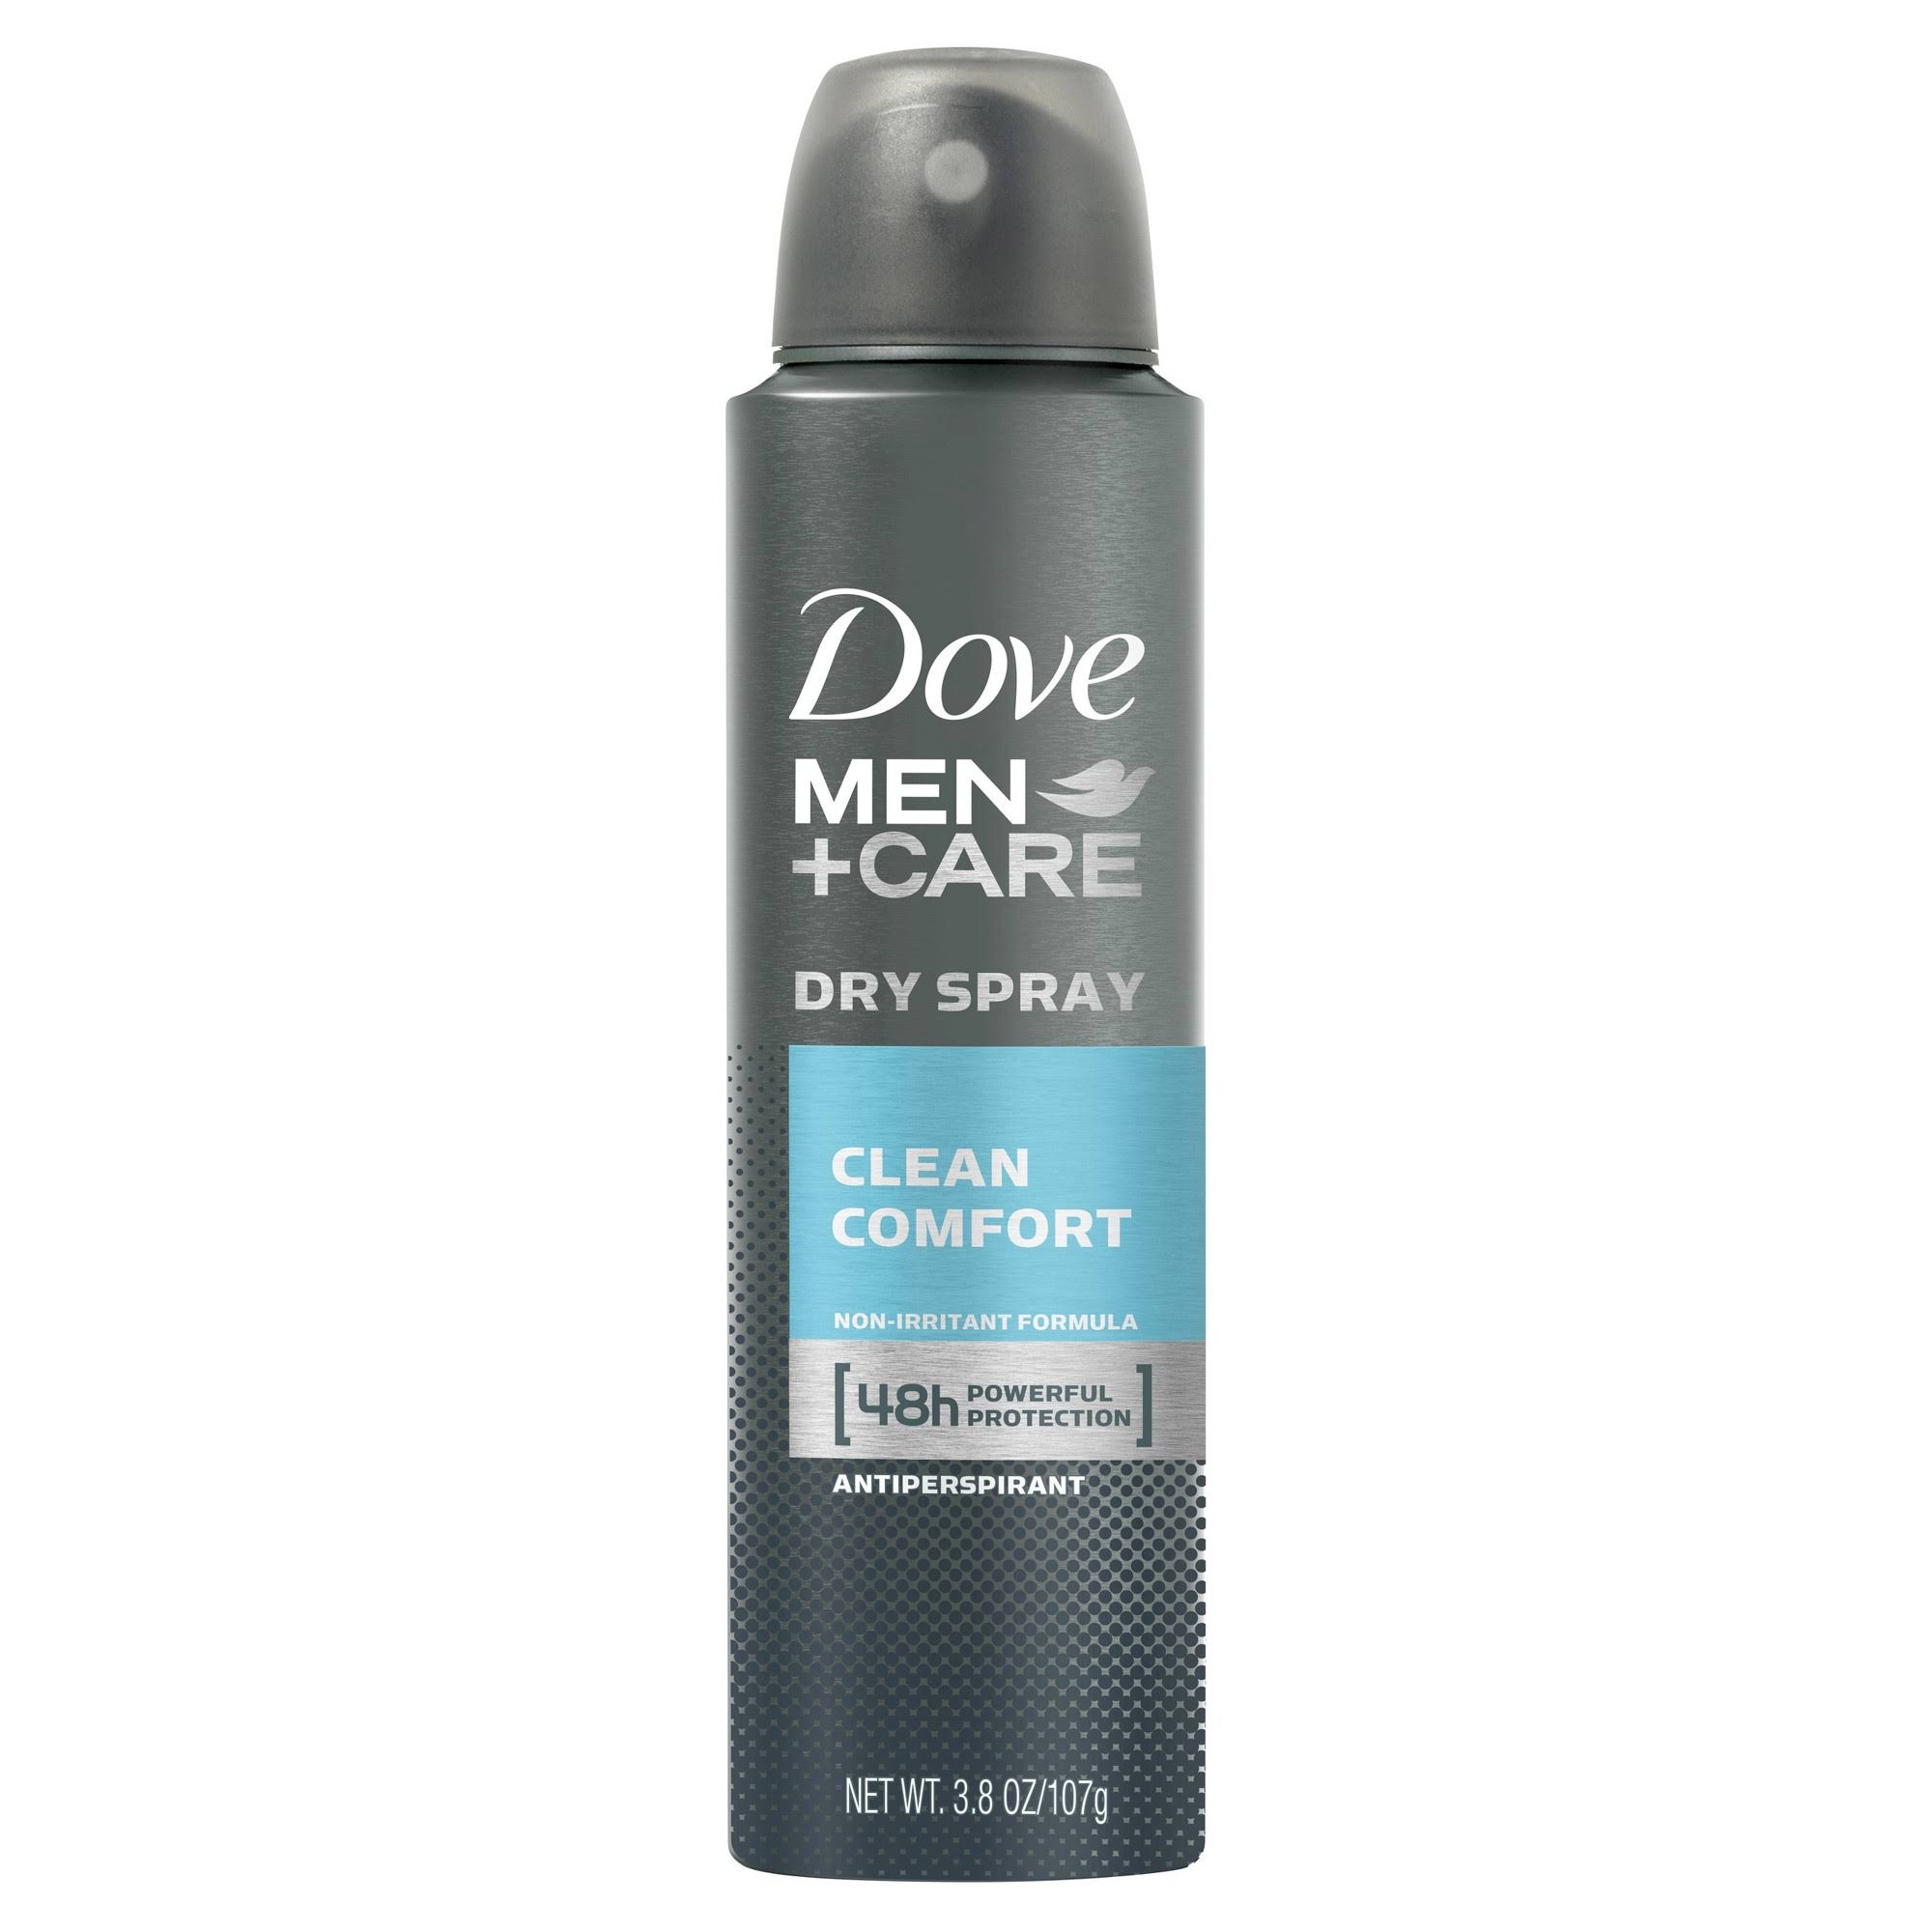 Dove Men+Care Dry Spray Antiperspirant - Clean Comfort, 107g